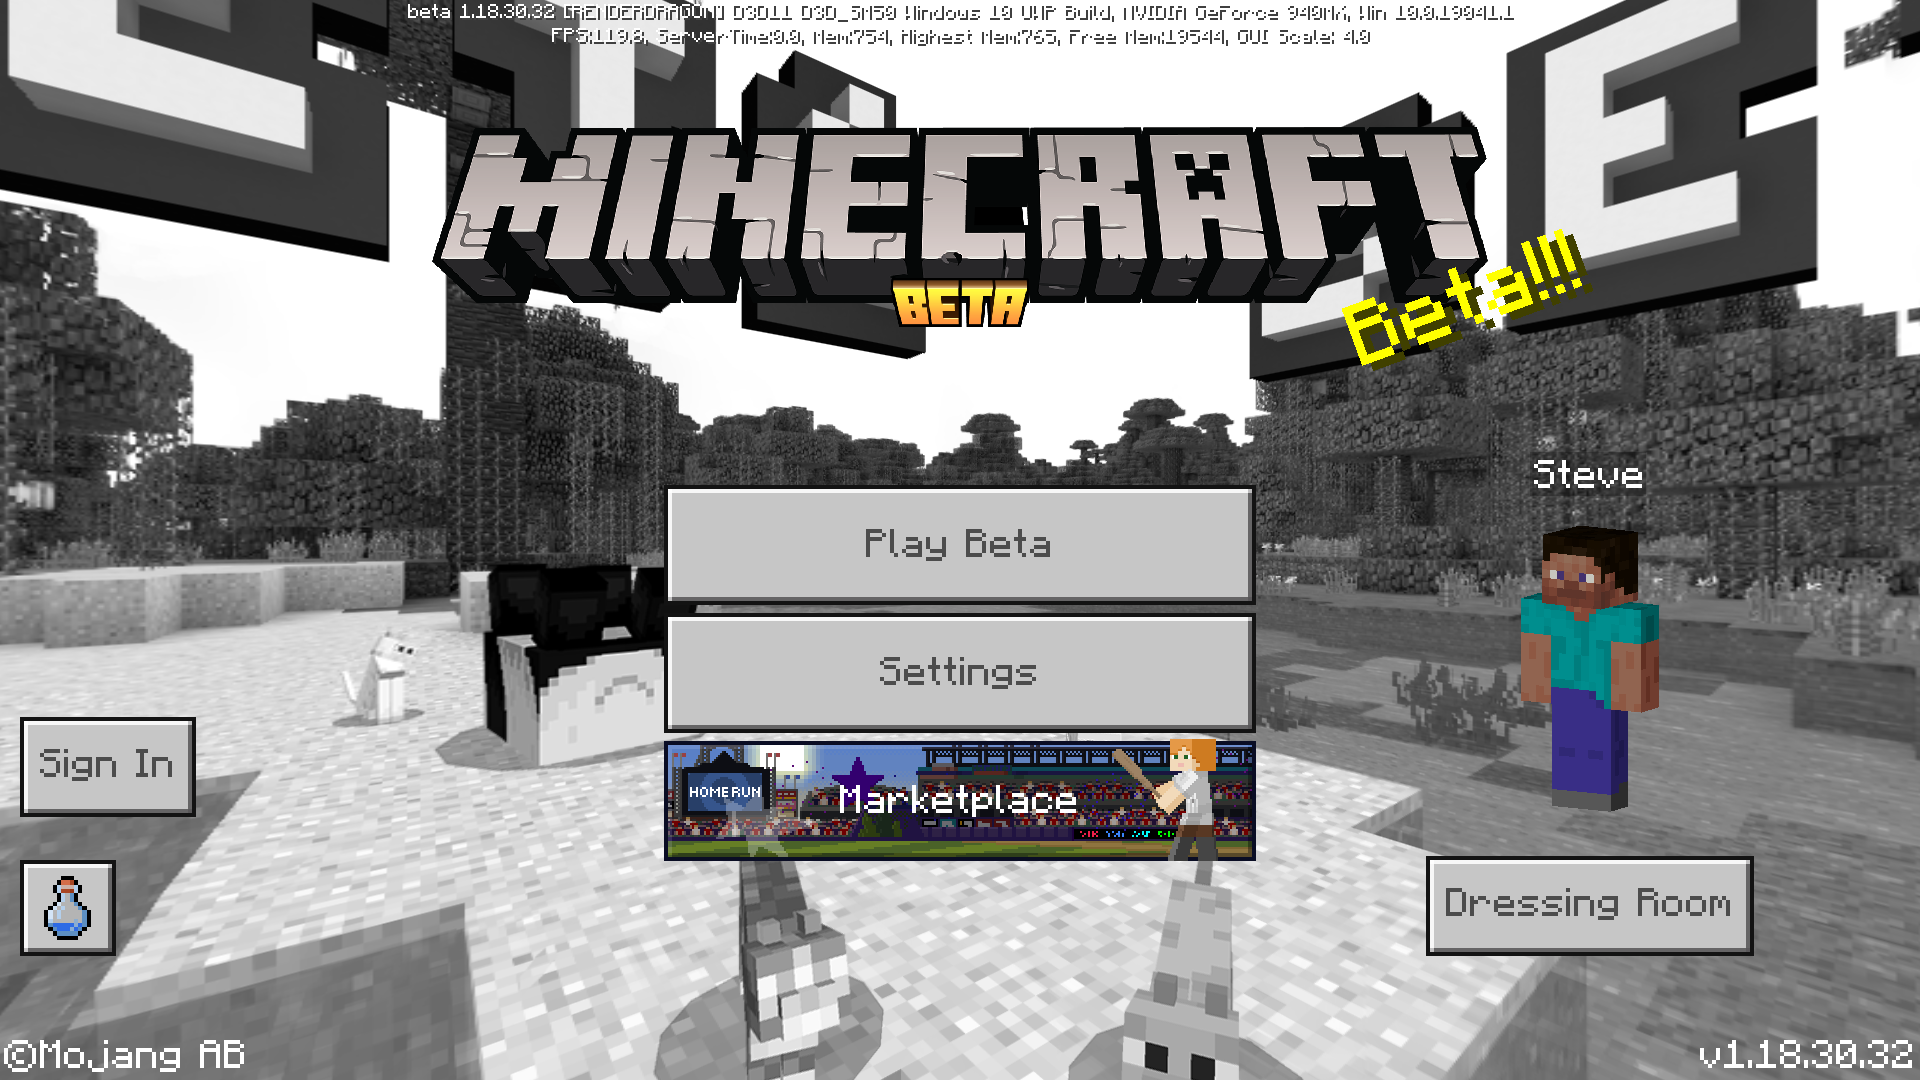 Deep Dark: Minecraft Bedrock Edition Beta 1.18.30.28 é lançado com